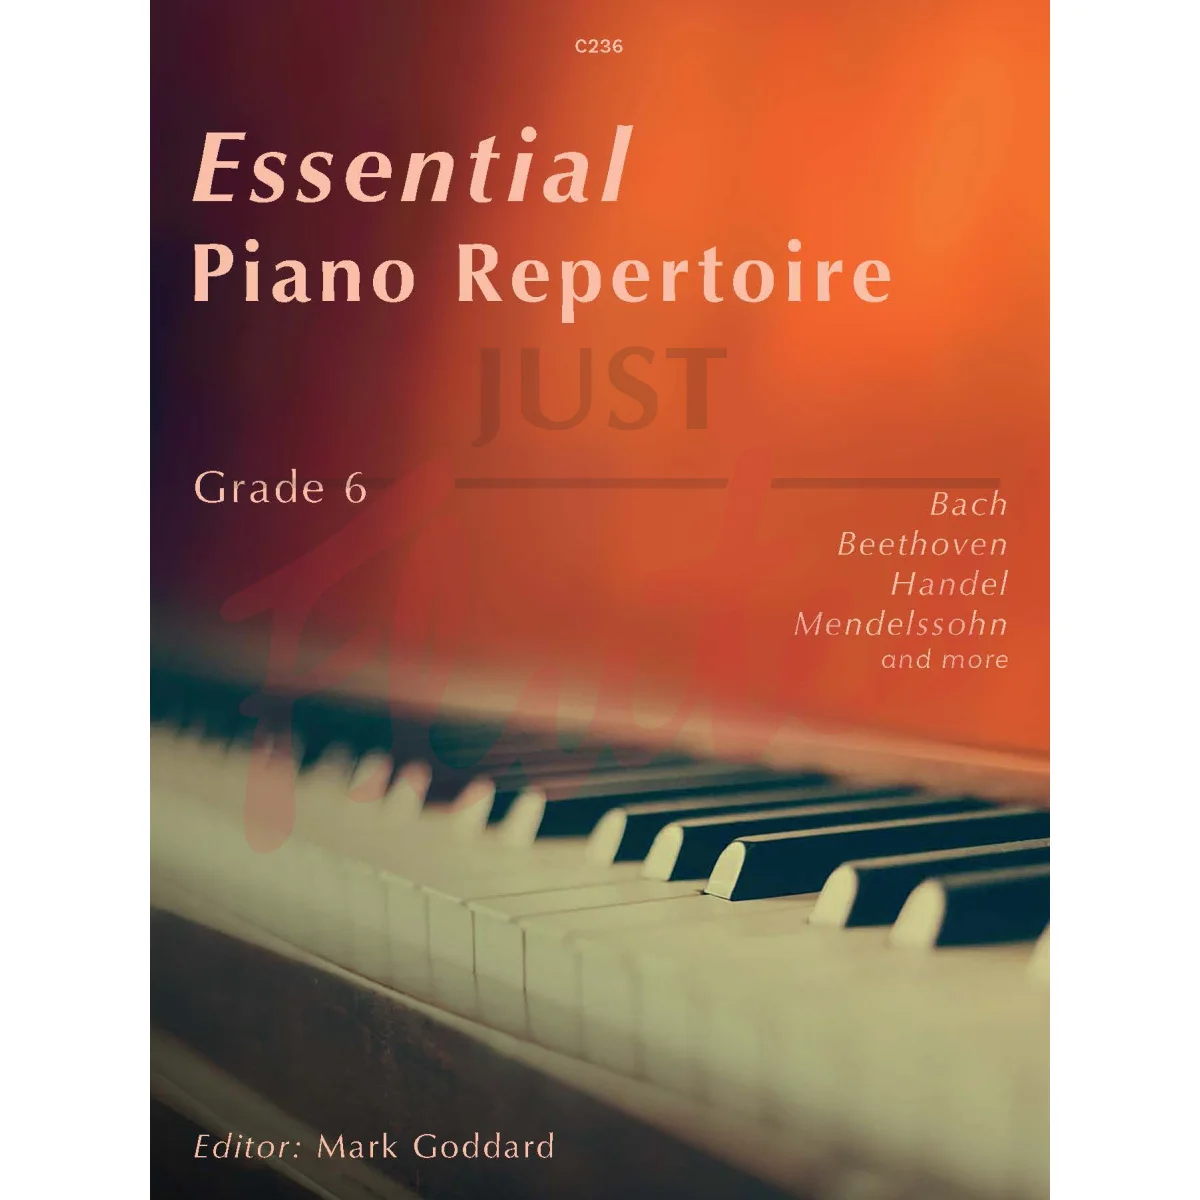 Essential Piano Repertoire: Grade 6